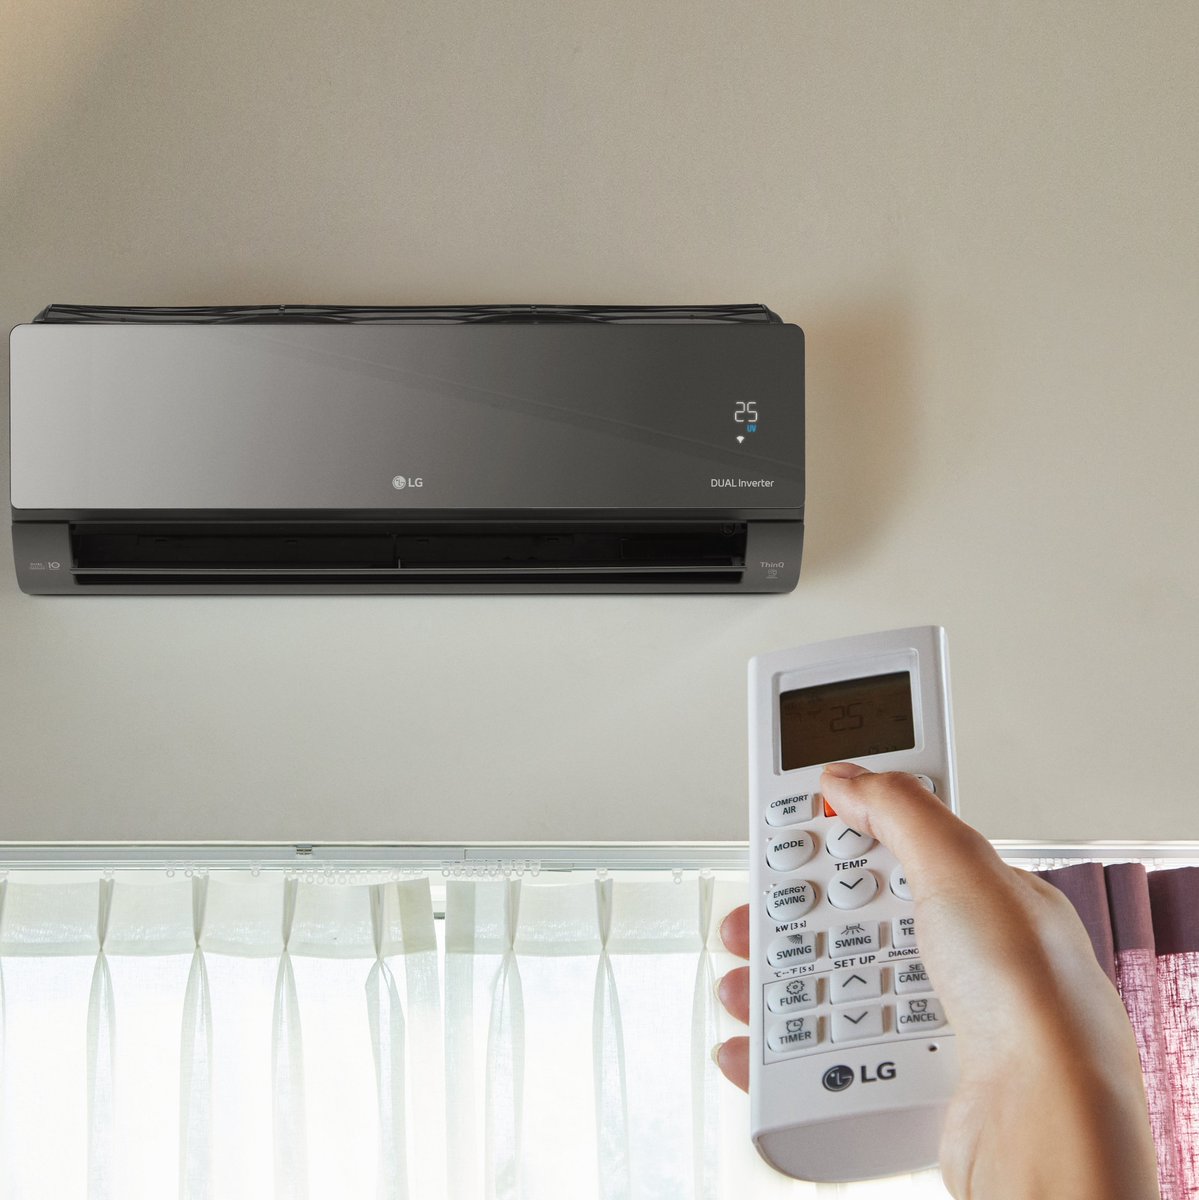 LG UV Artcool Klimalarla Evlerine Hava Katanlar Kazanıyor hvac360tr.com/lg-uv-artcool-… #LG #klima #airconditioning #HVAC #home